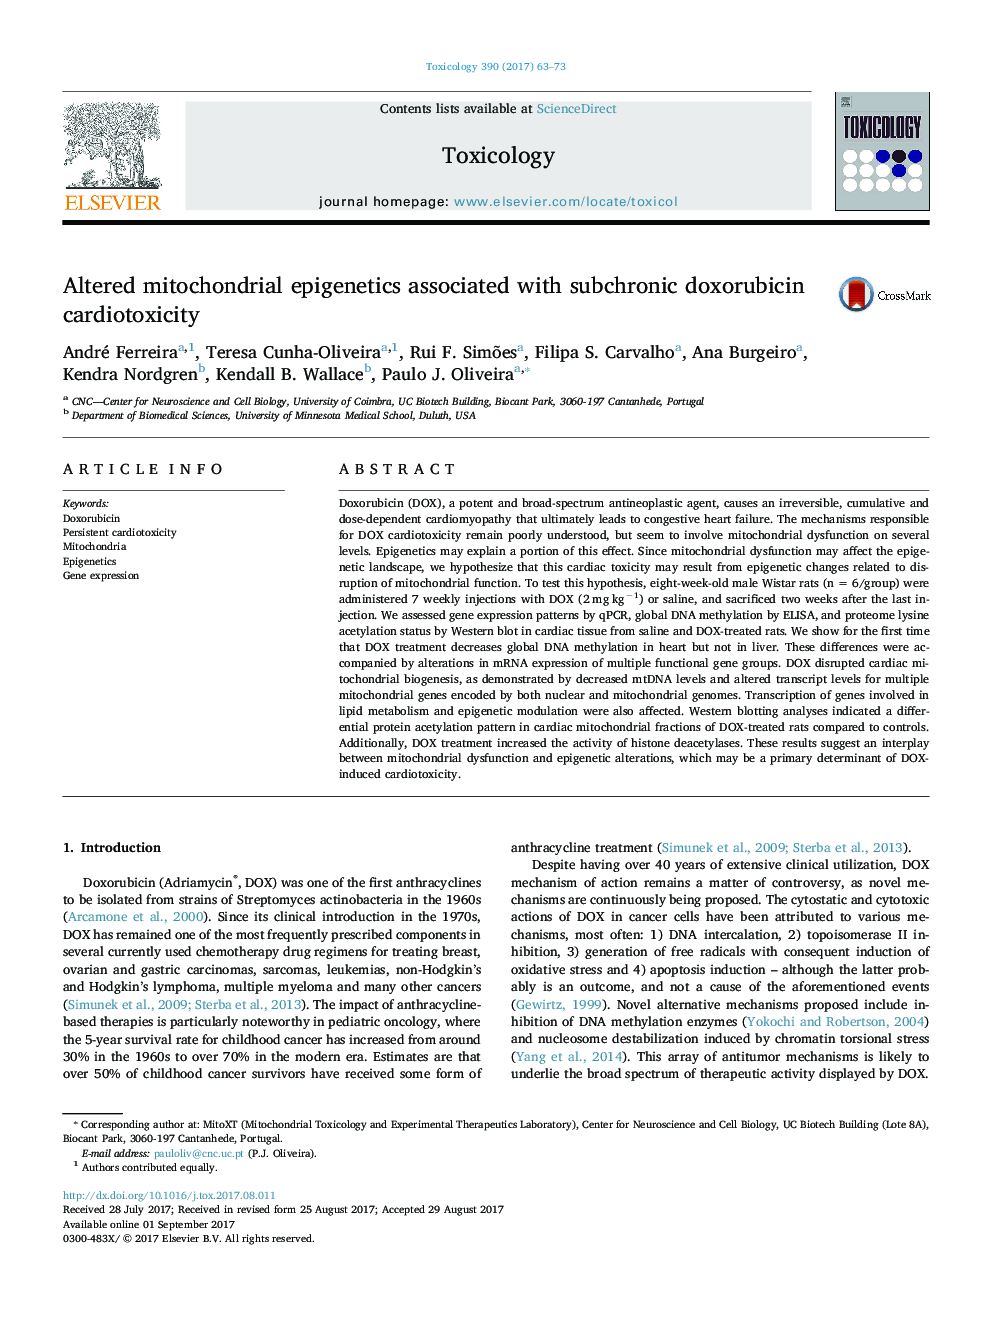 Altered mitochondrial epigenetics associated with subchronic doxorubicin cardiotoxicity